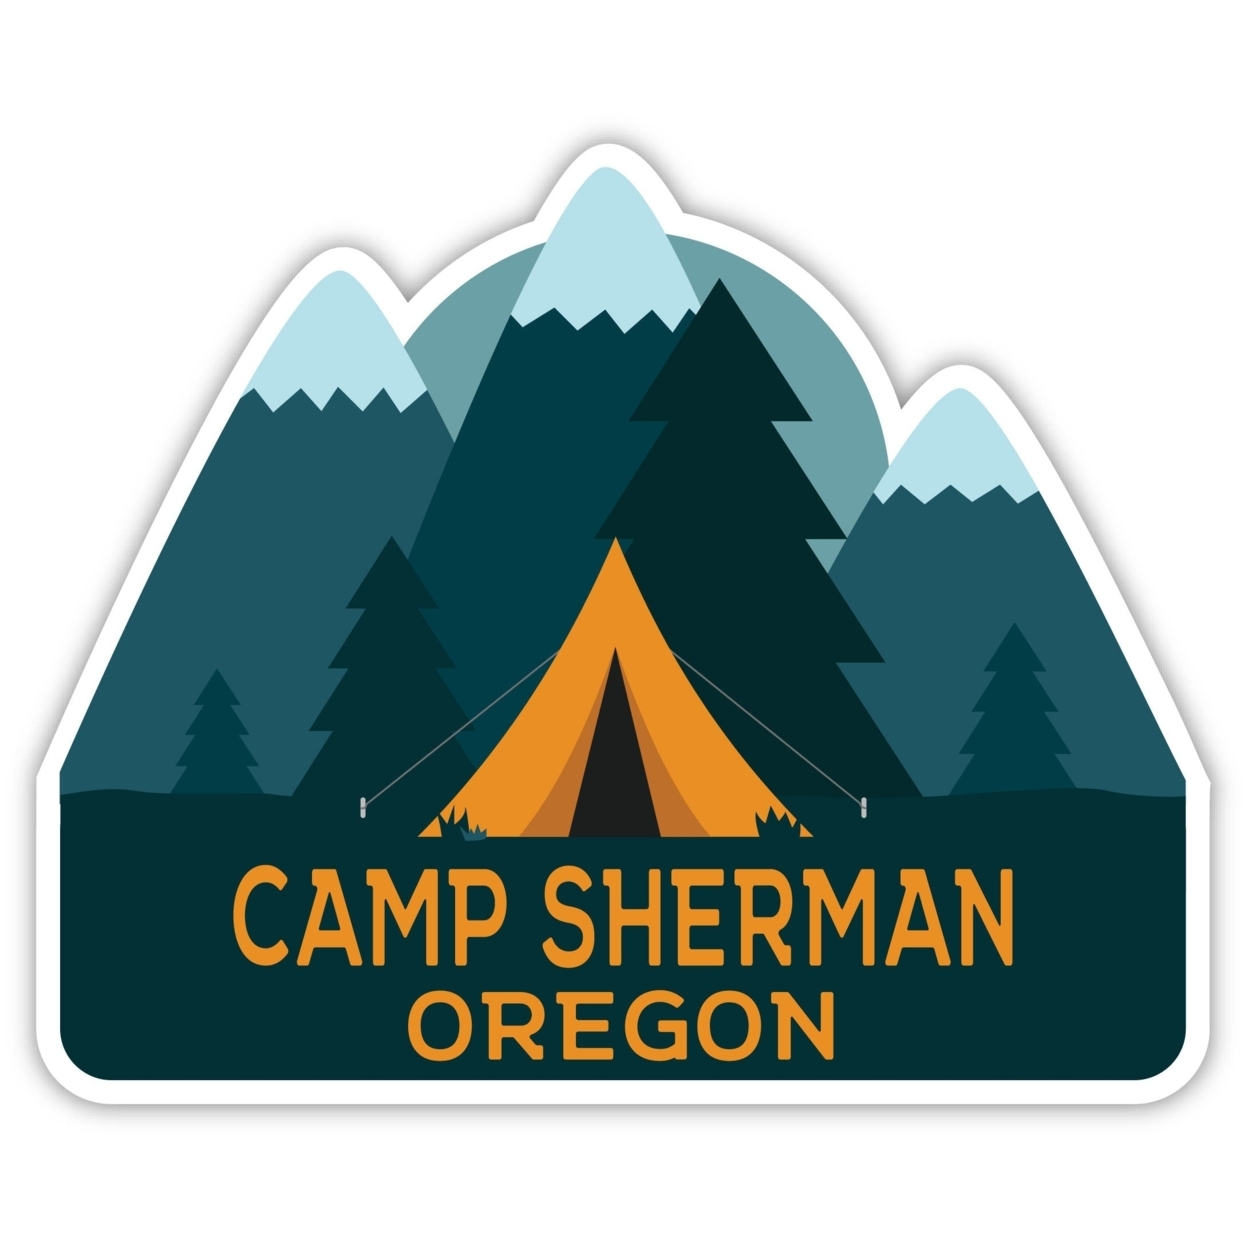 Camp Sherman Oregon Souvenir Decorative Stickers (Choose Theme And Size) - 4-Pack, 8-Inch, Tent